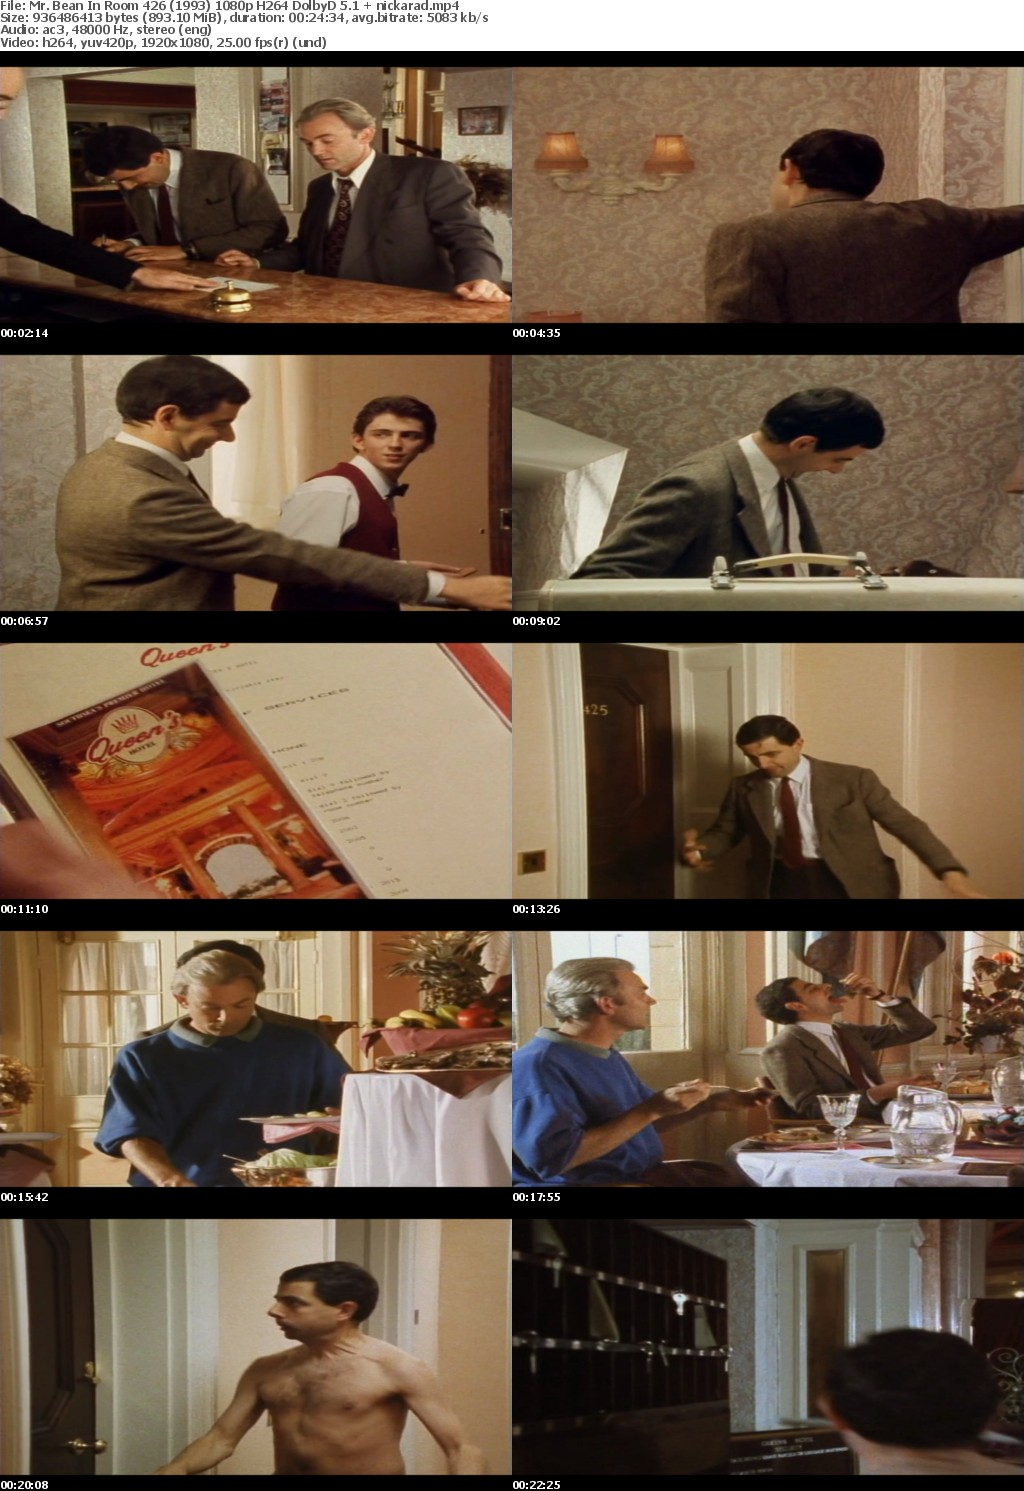 Mr Bean In Room 426 (1993) 1080p H264 DolbyD 5 1 nickarad